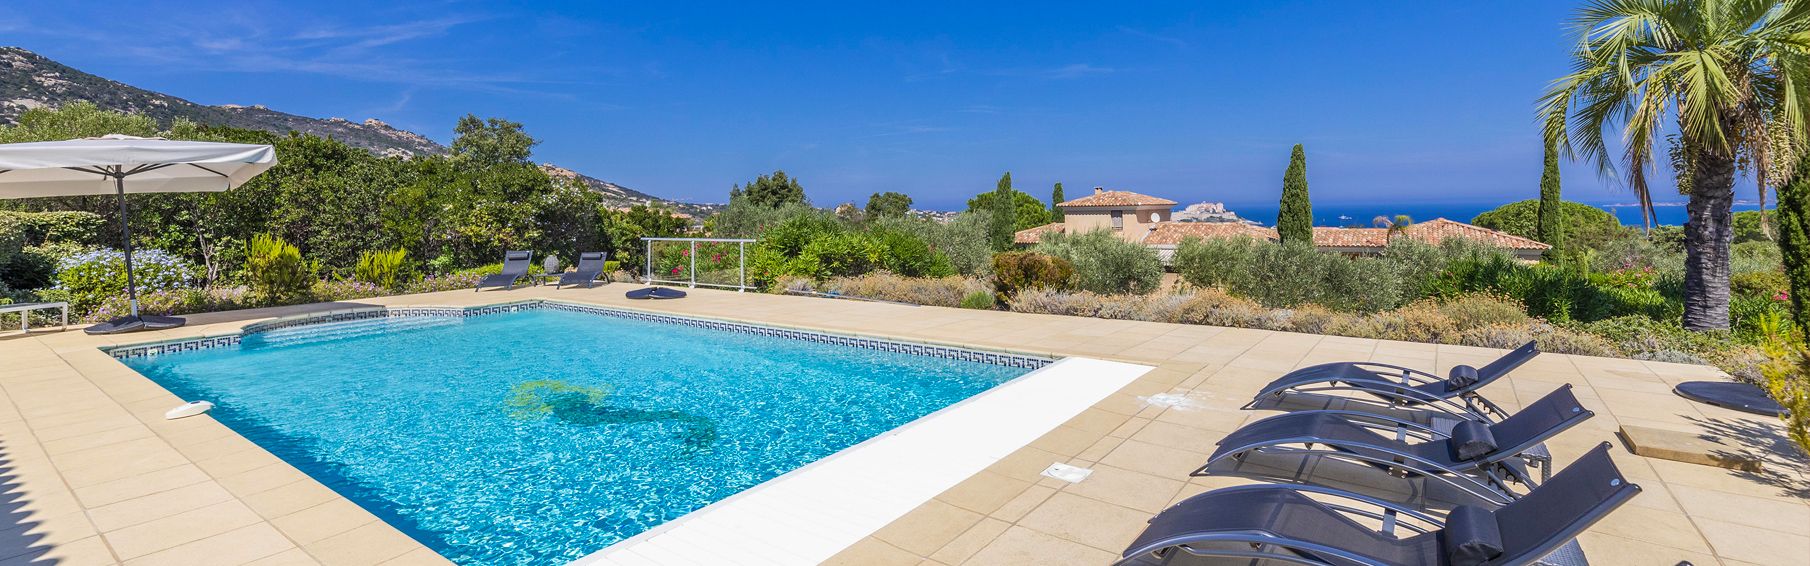 Location villa vue mer avec piscine en Balagne, Calvi